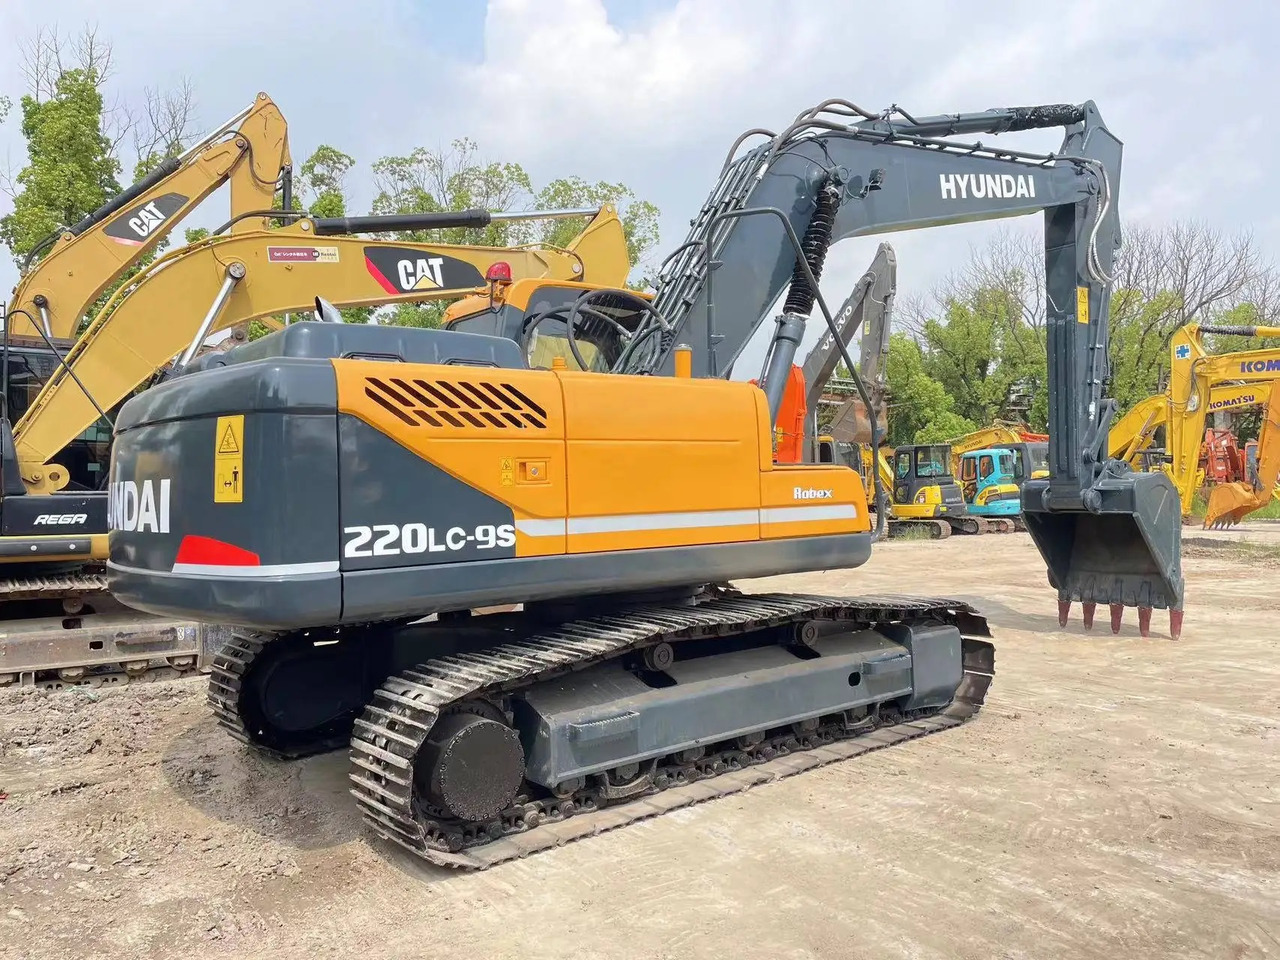 Bager guseničar HYUNDAI R220 -9S track excavator 22 tons Korean hydraulic digger: slika 3